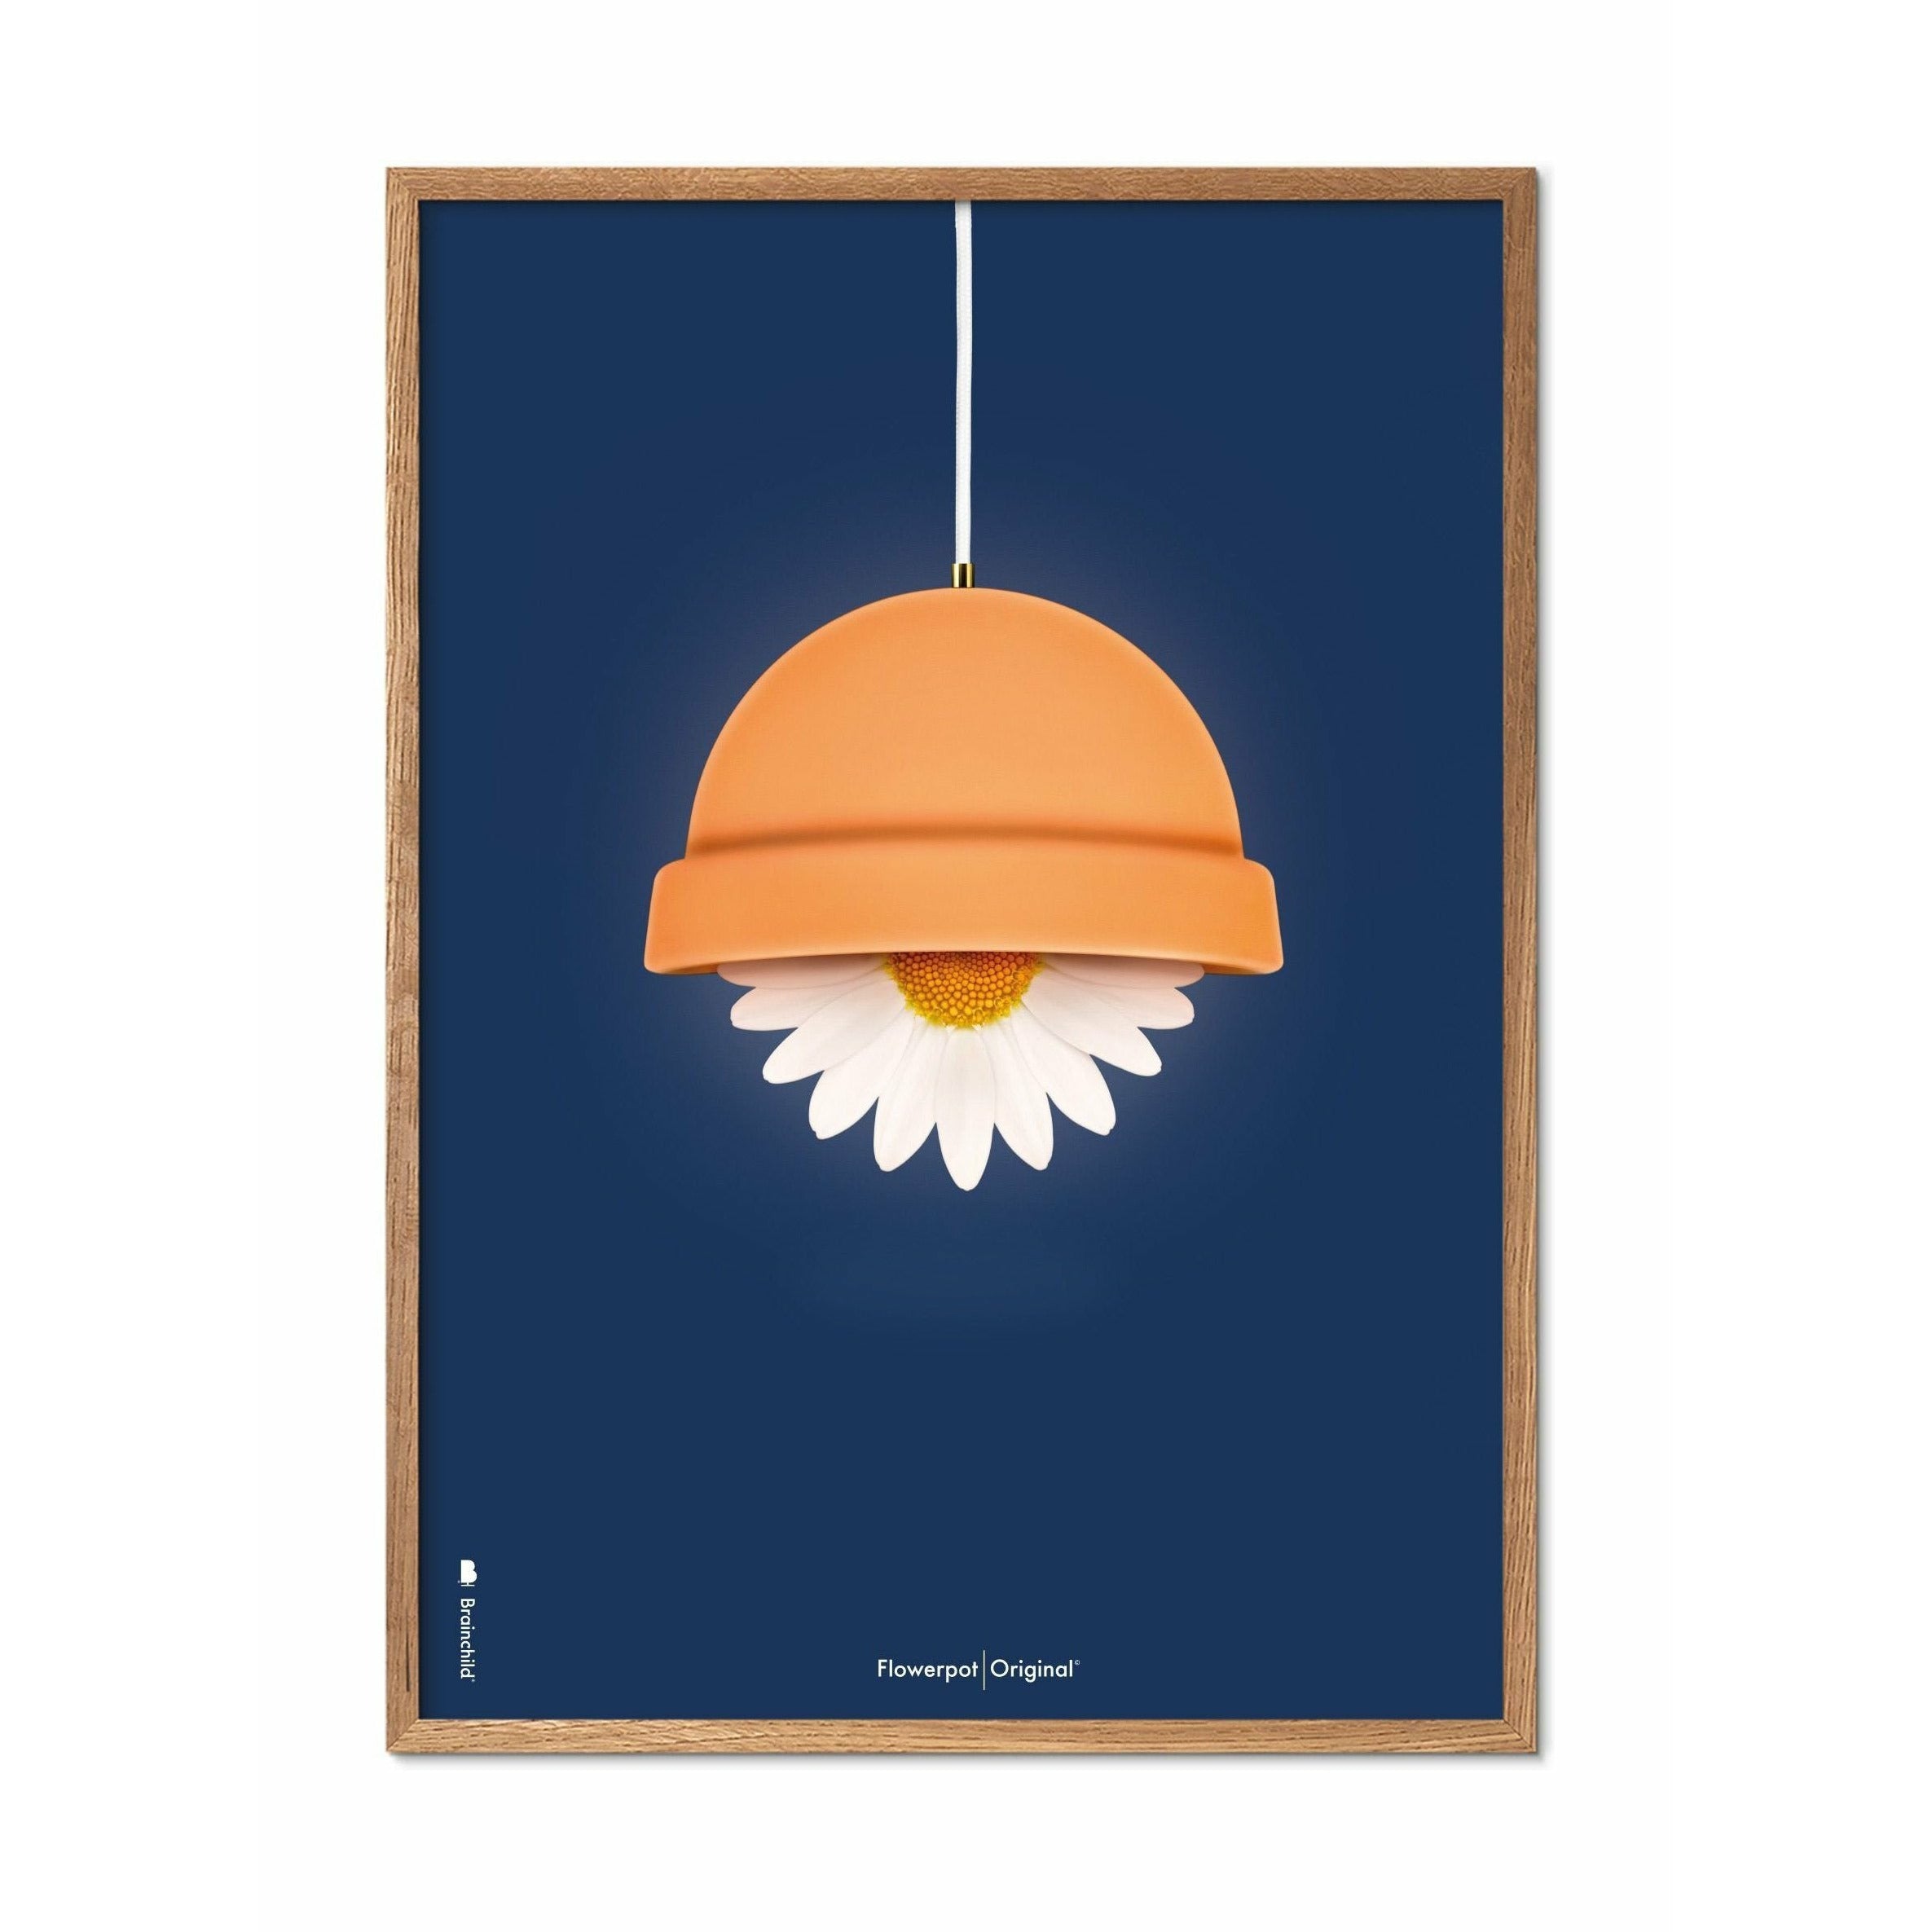 Brainchild Flowerpot Klassisk Plakat, Ramme I Lyst Træ 30X40 Cm, Mørkeblå Baggrund